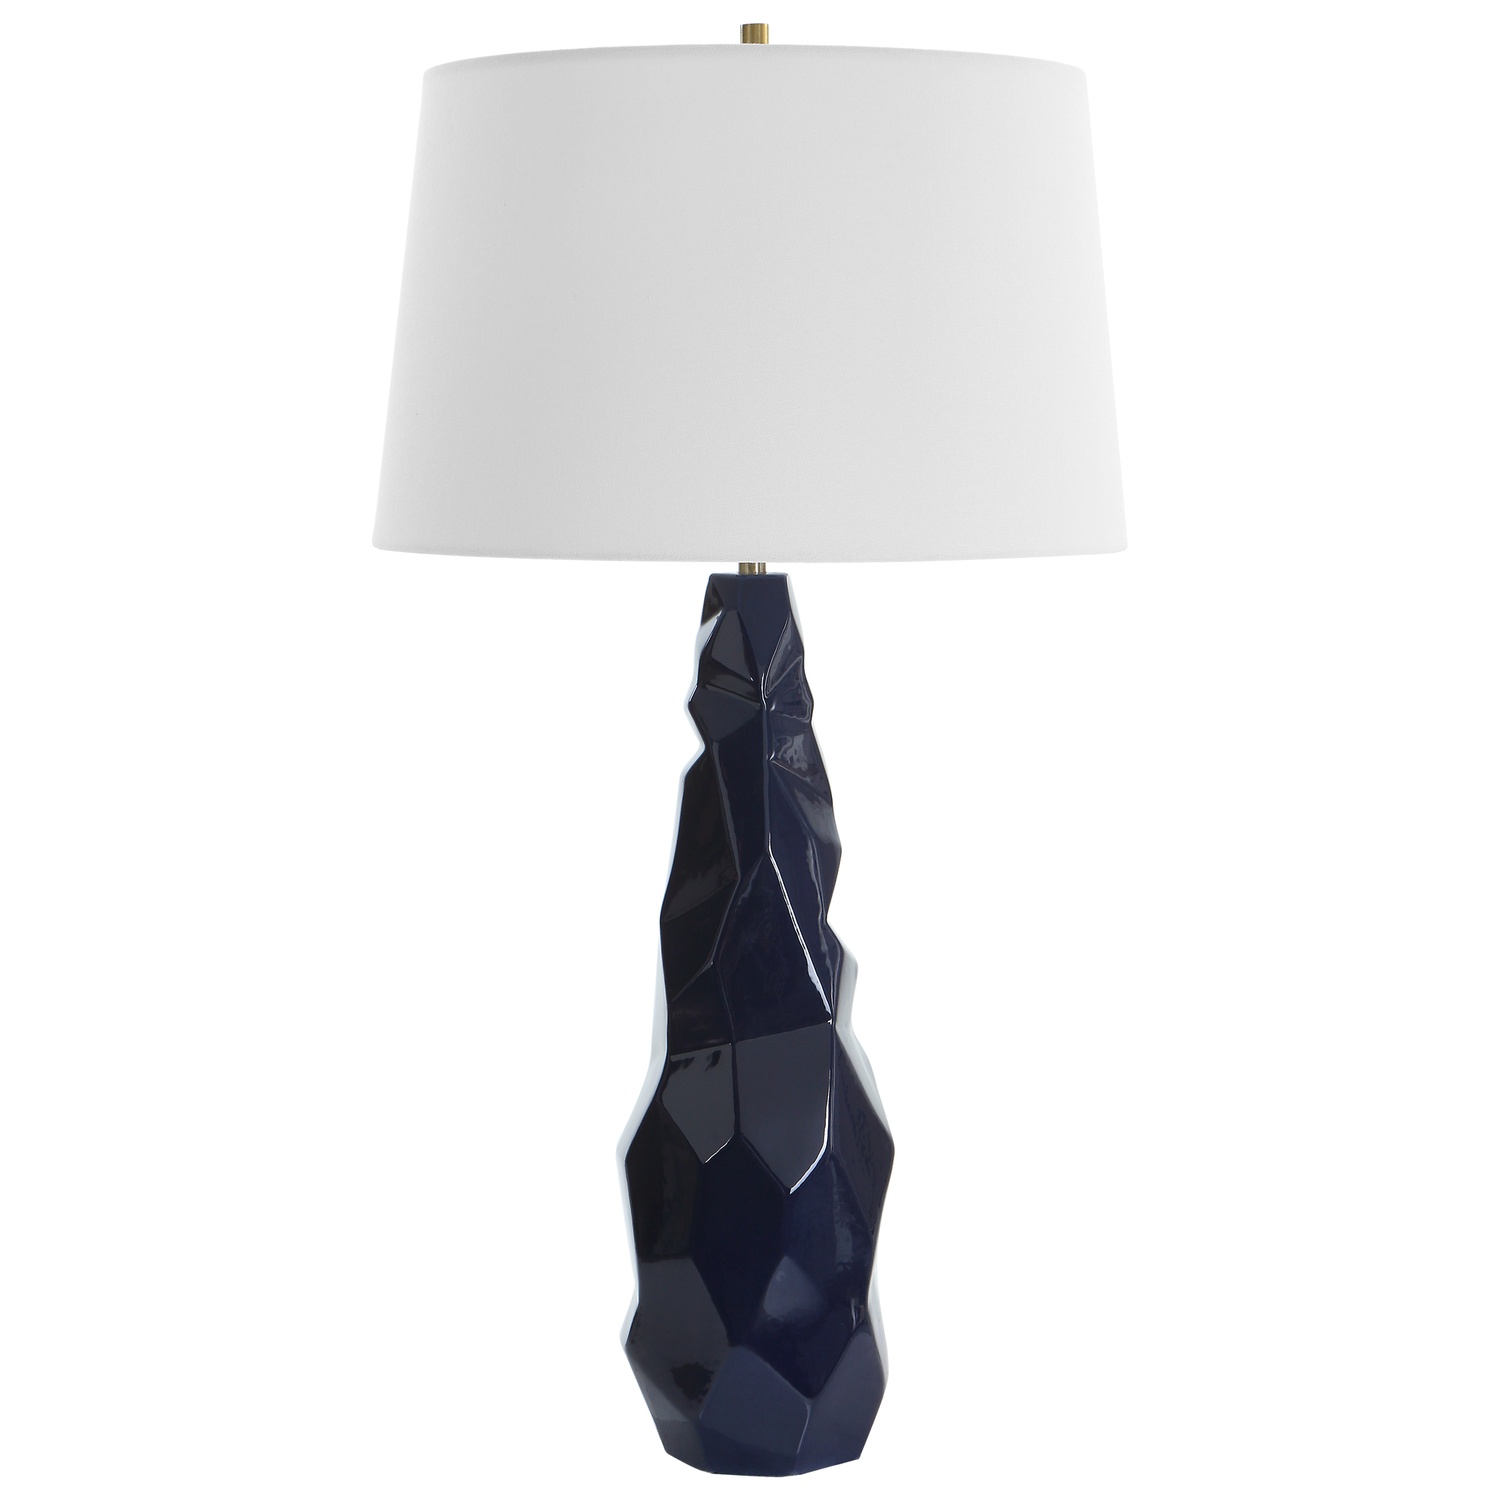 Kavos-Geometric Blue Table Lamp